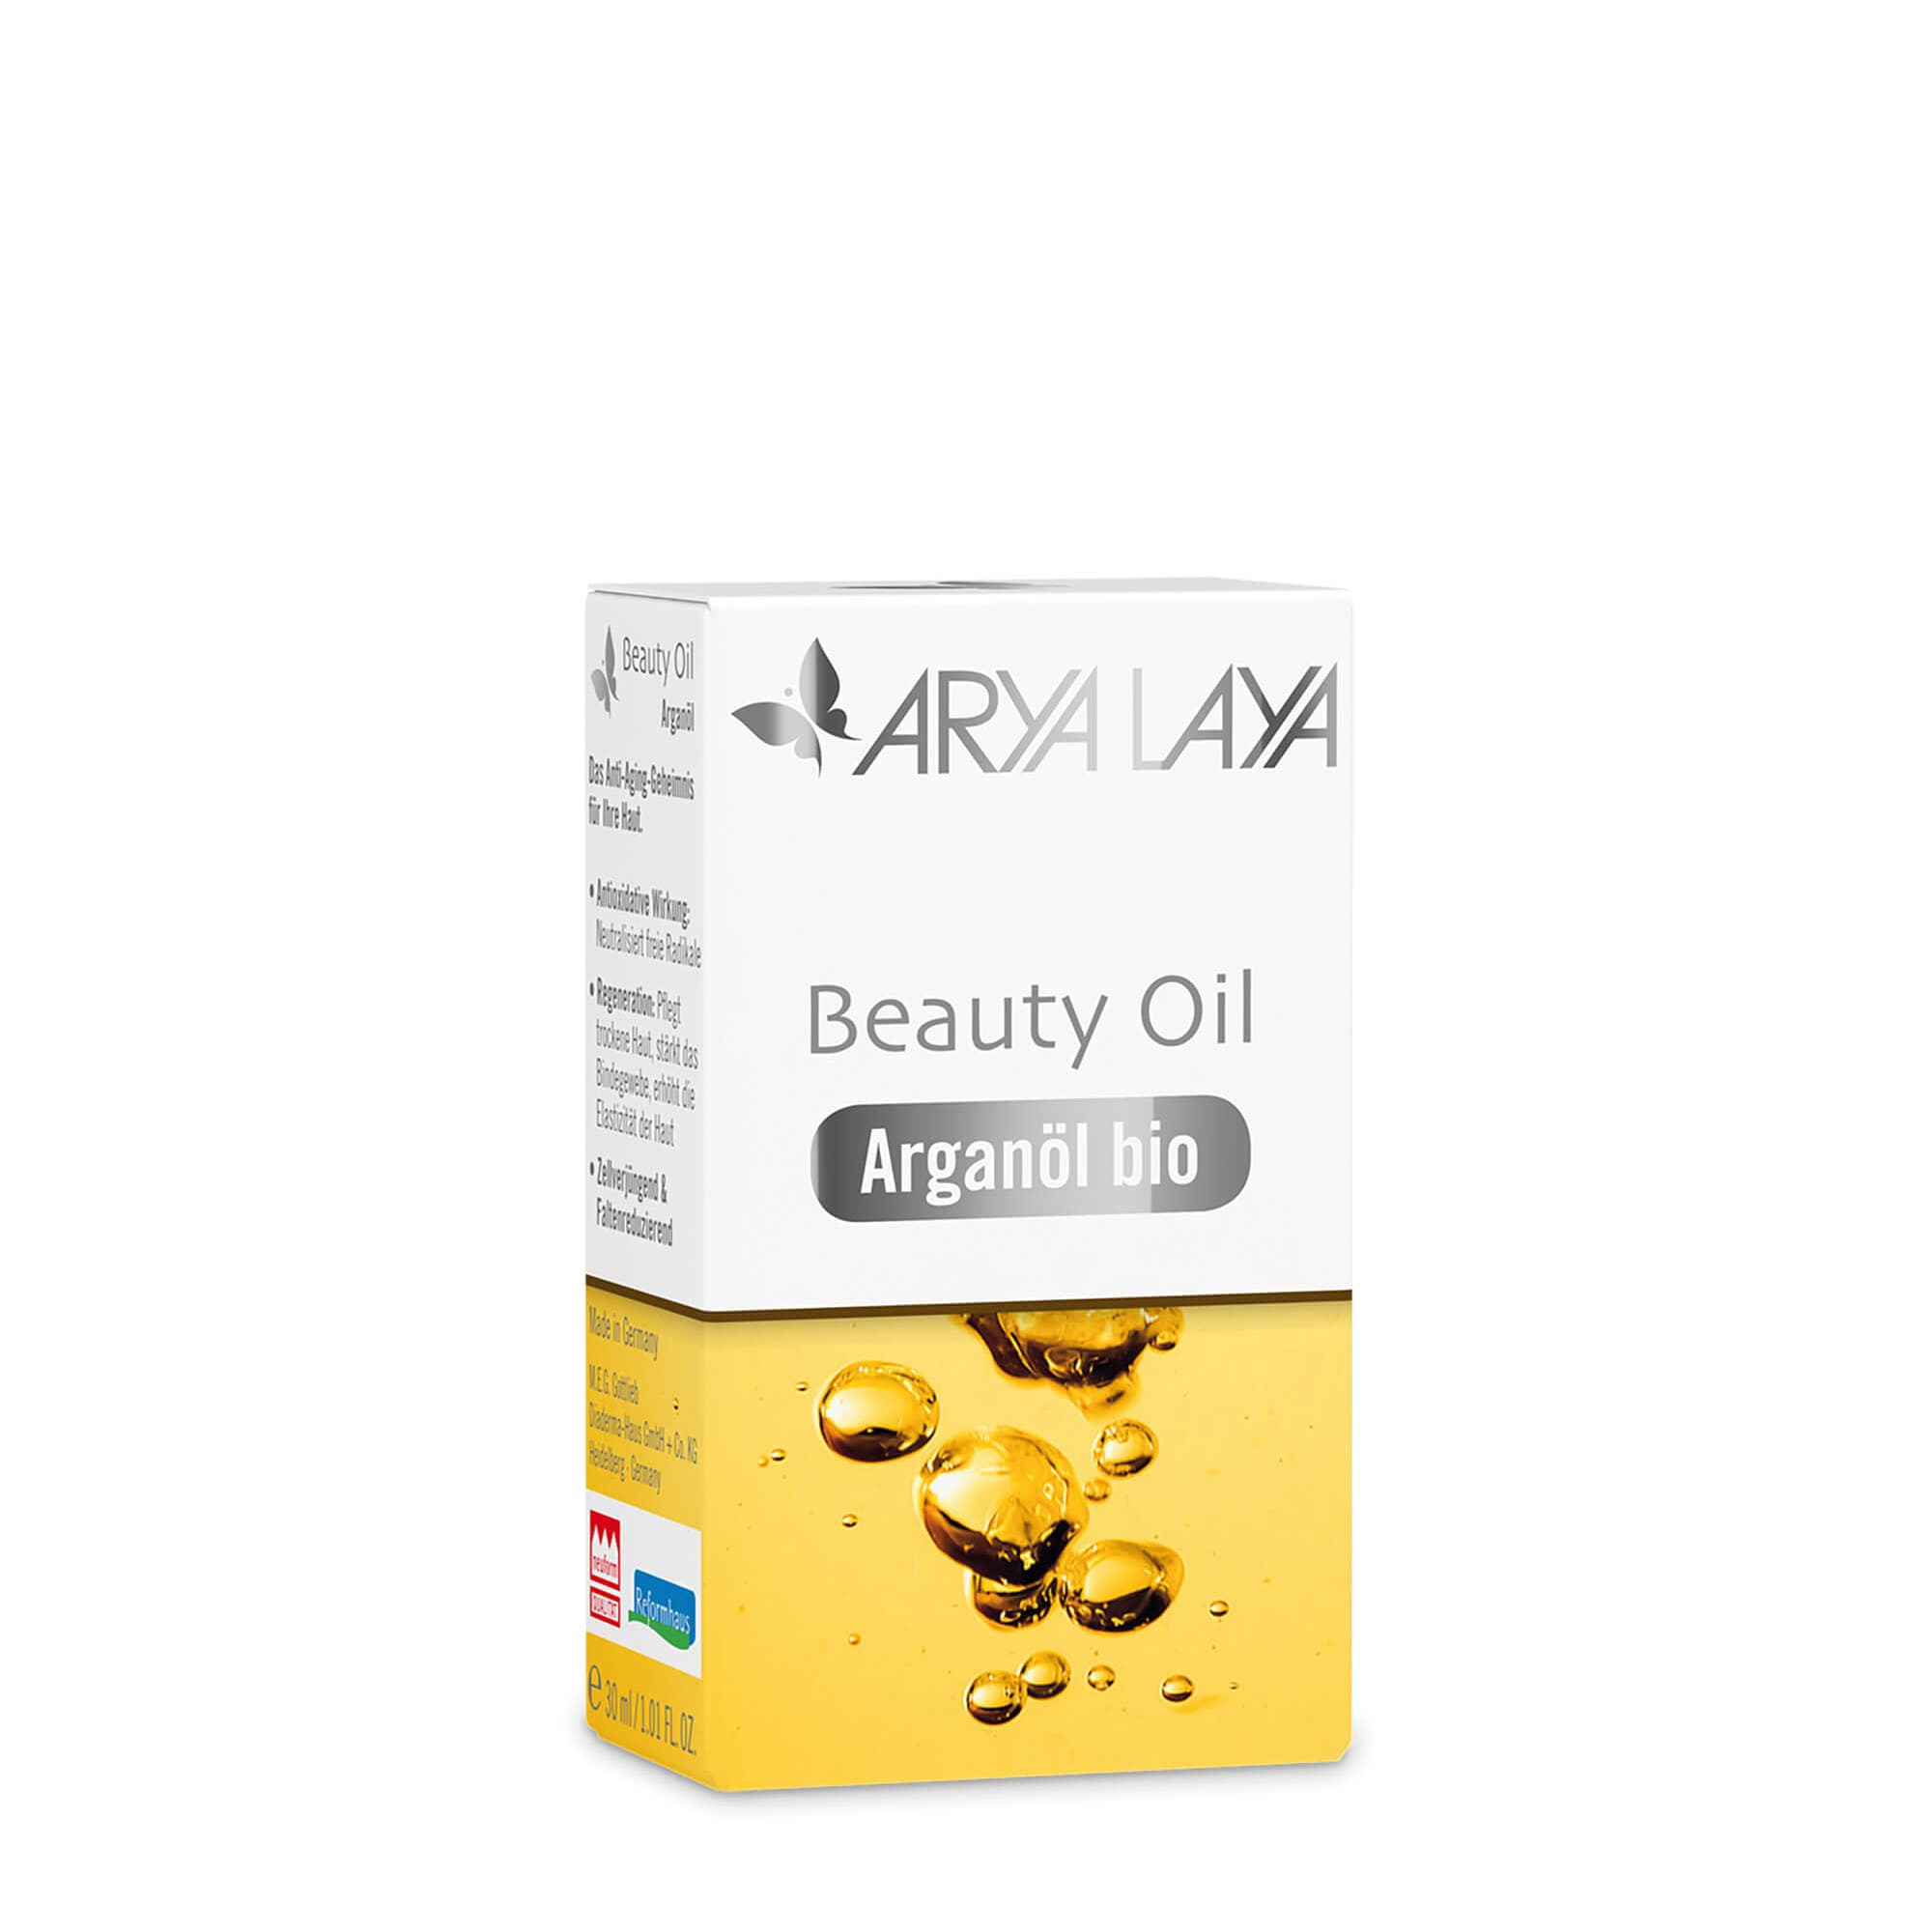 Faltschachtel mit ARYA LAYA Beauty Oil Arganöl bio, 30 ml 